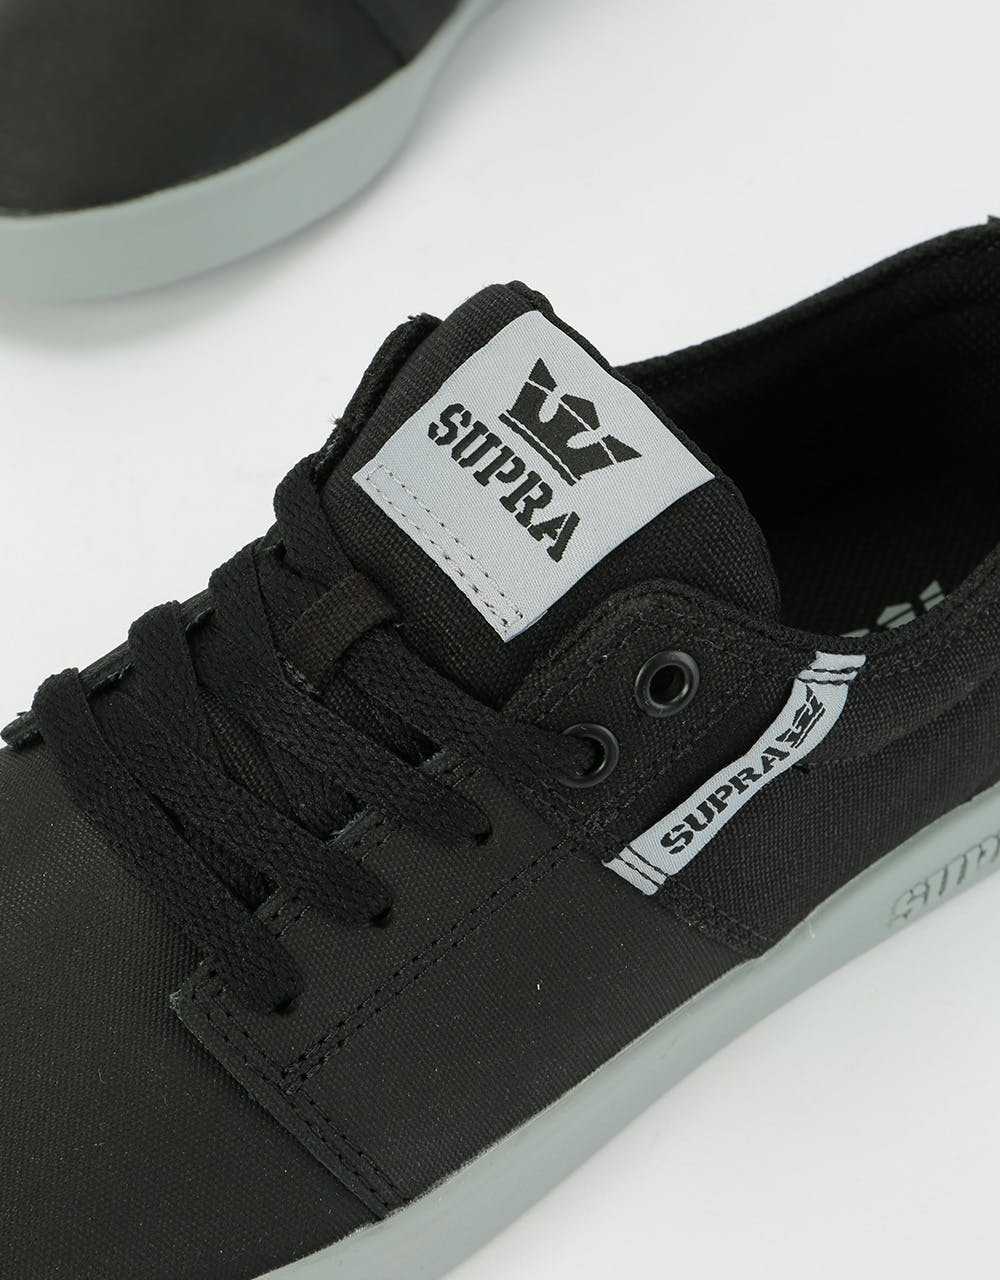 Supra Stacks II Skate Shoes - Black TUF/Light Grey